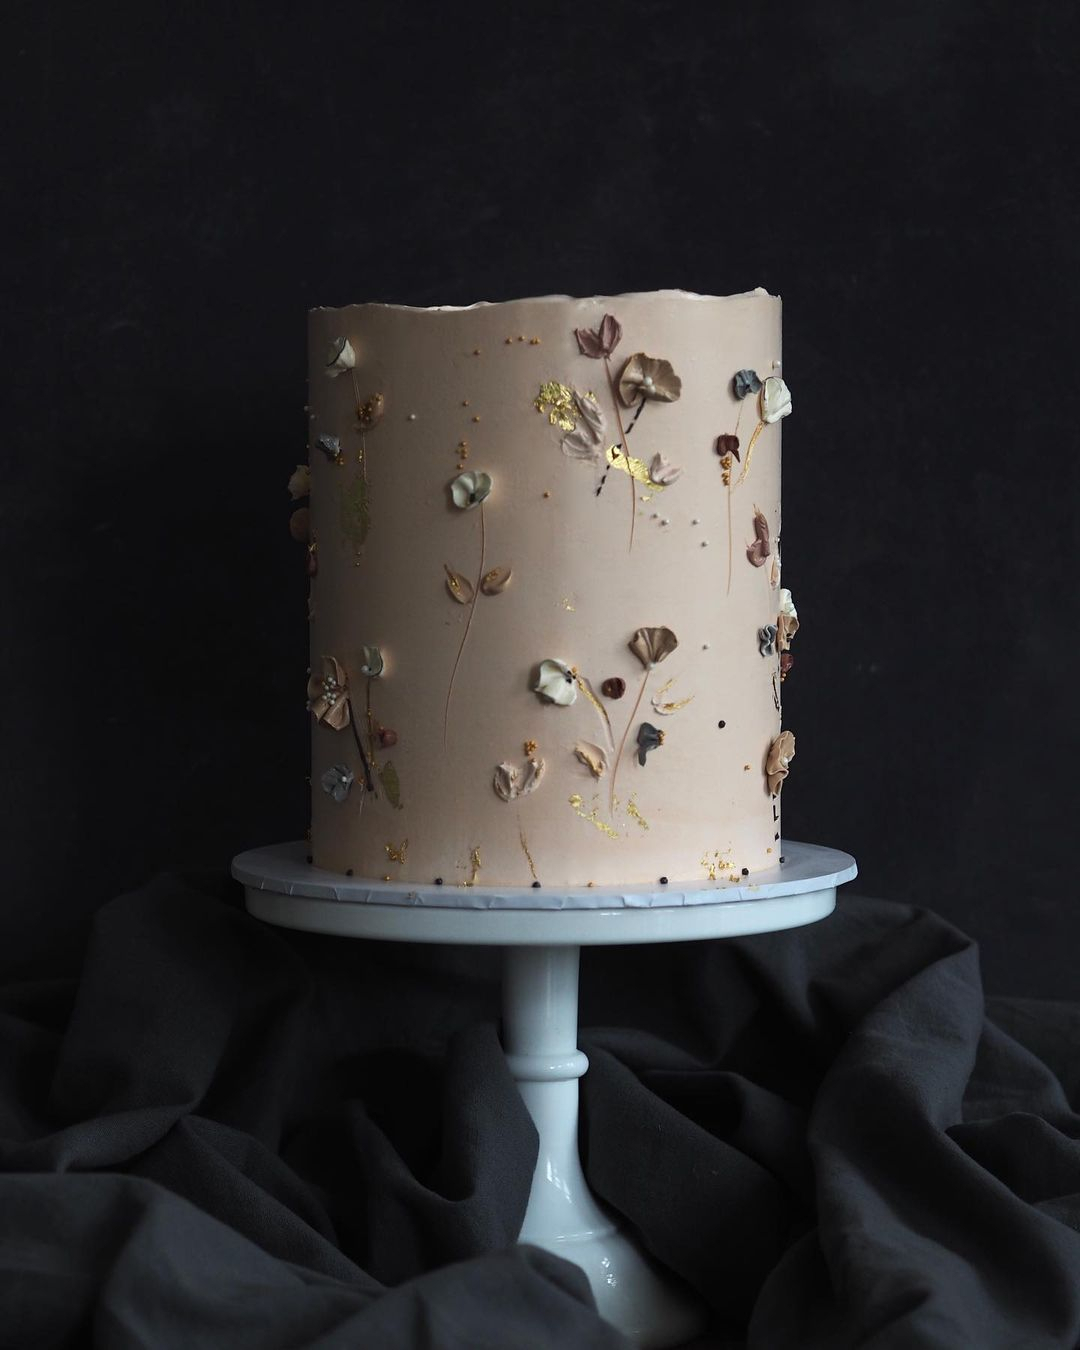 FEMALE MODERN BIRTHDAY CAKE | THE CRVAERY CAKES